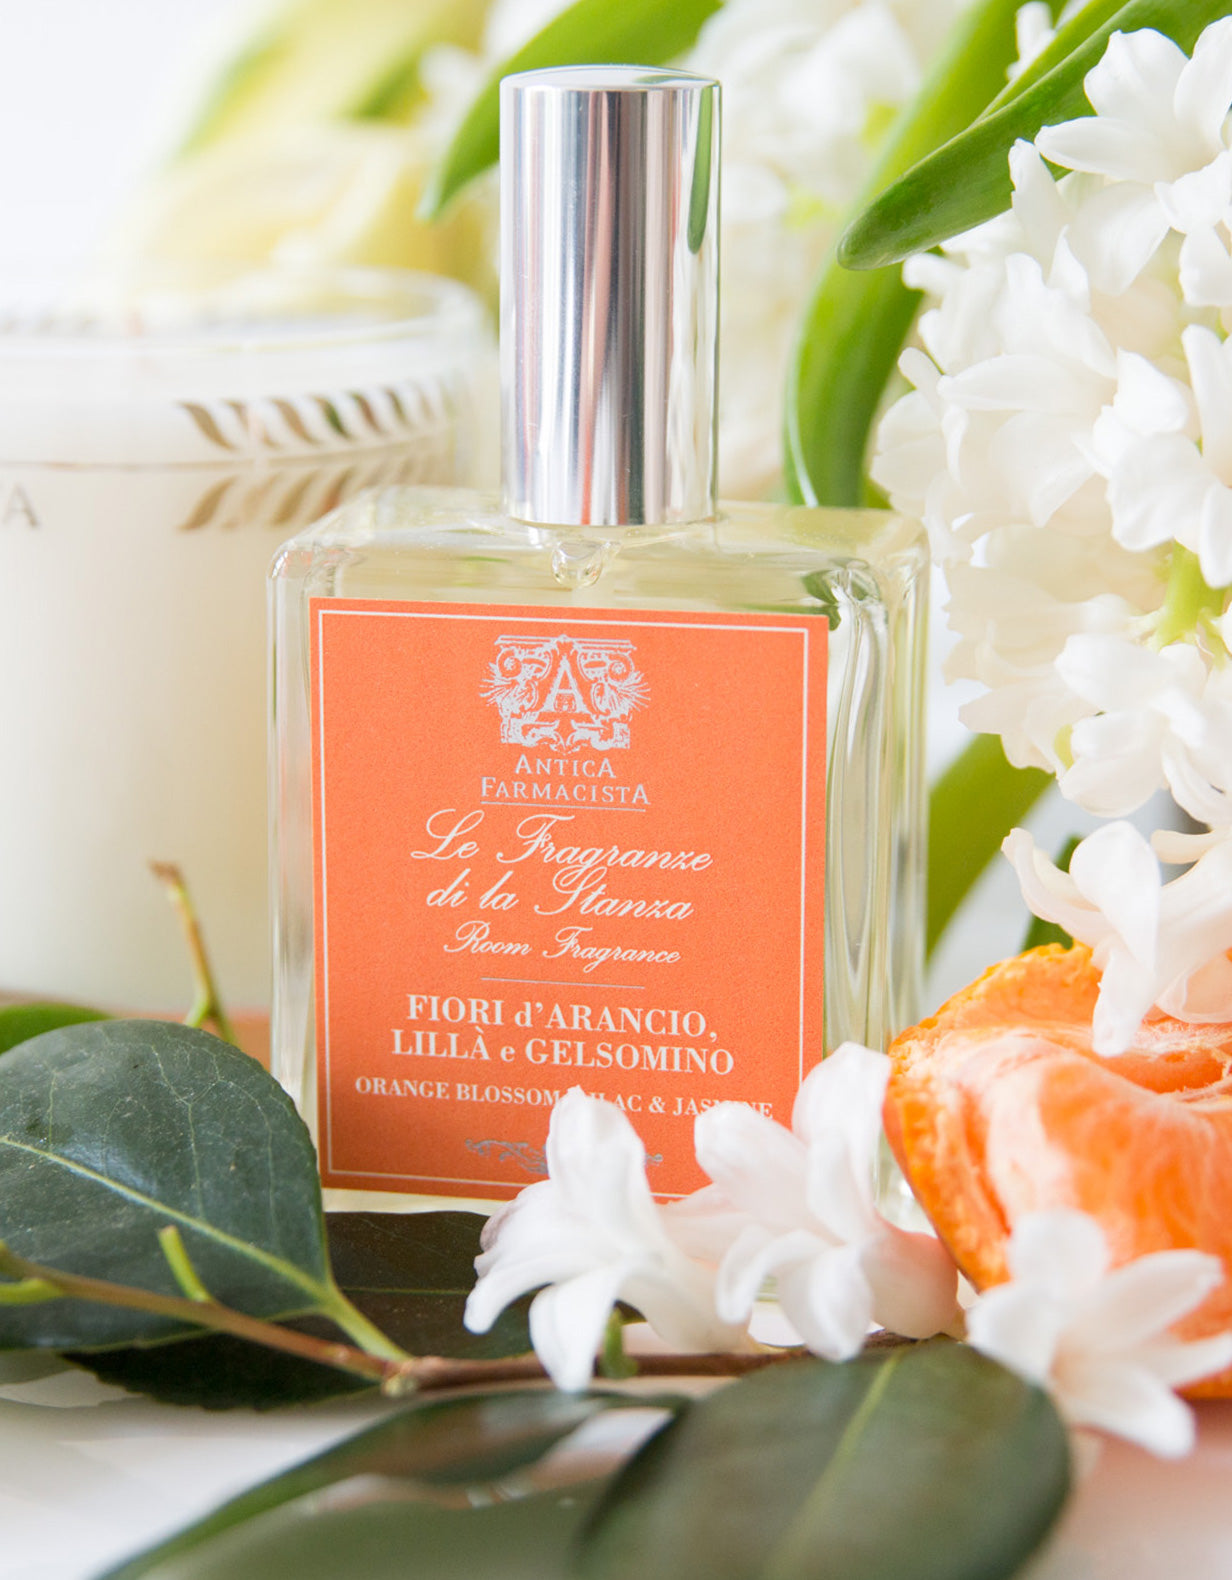 Orange Blossom, Lilac, & Jasmine Room Spray